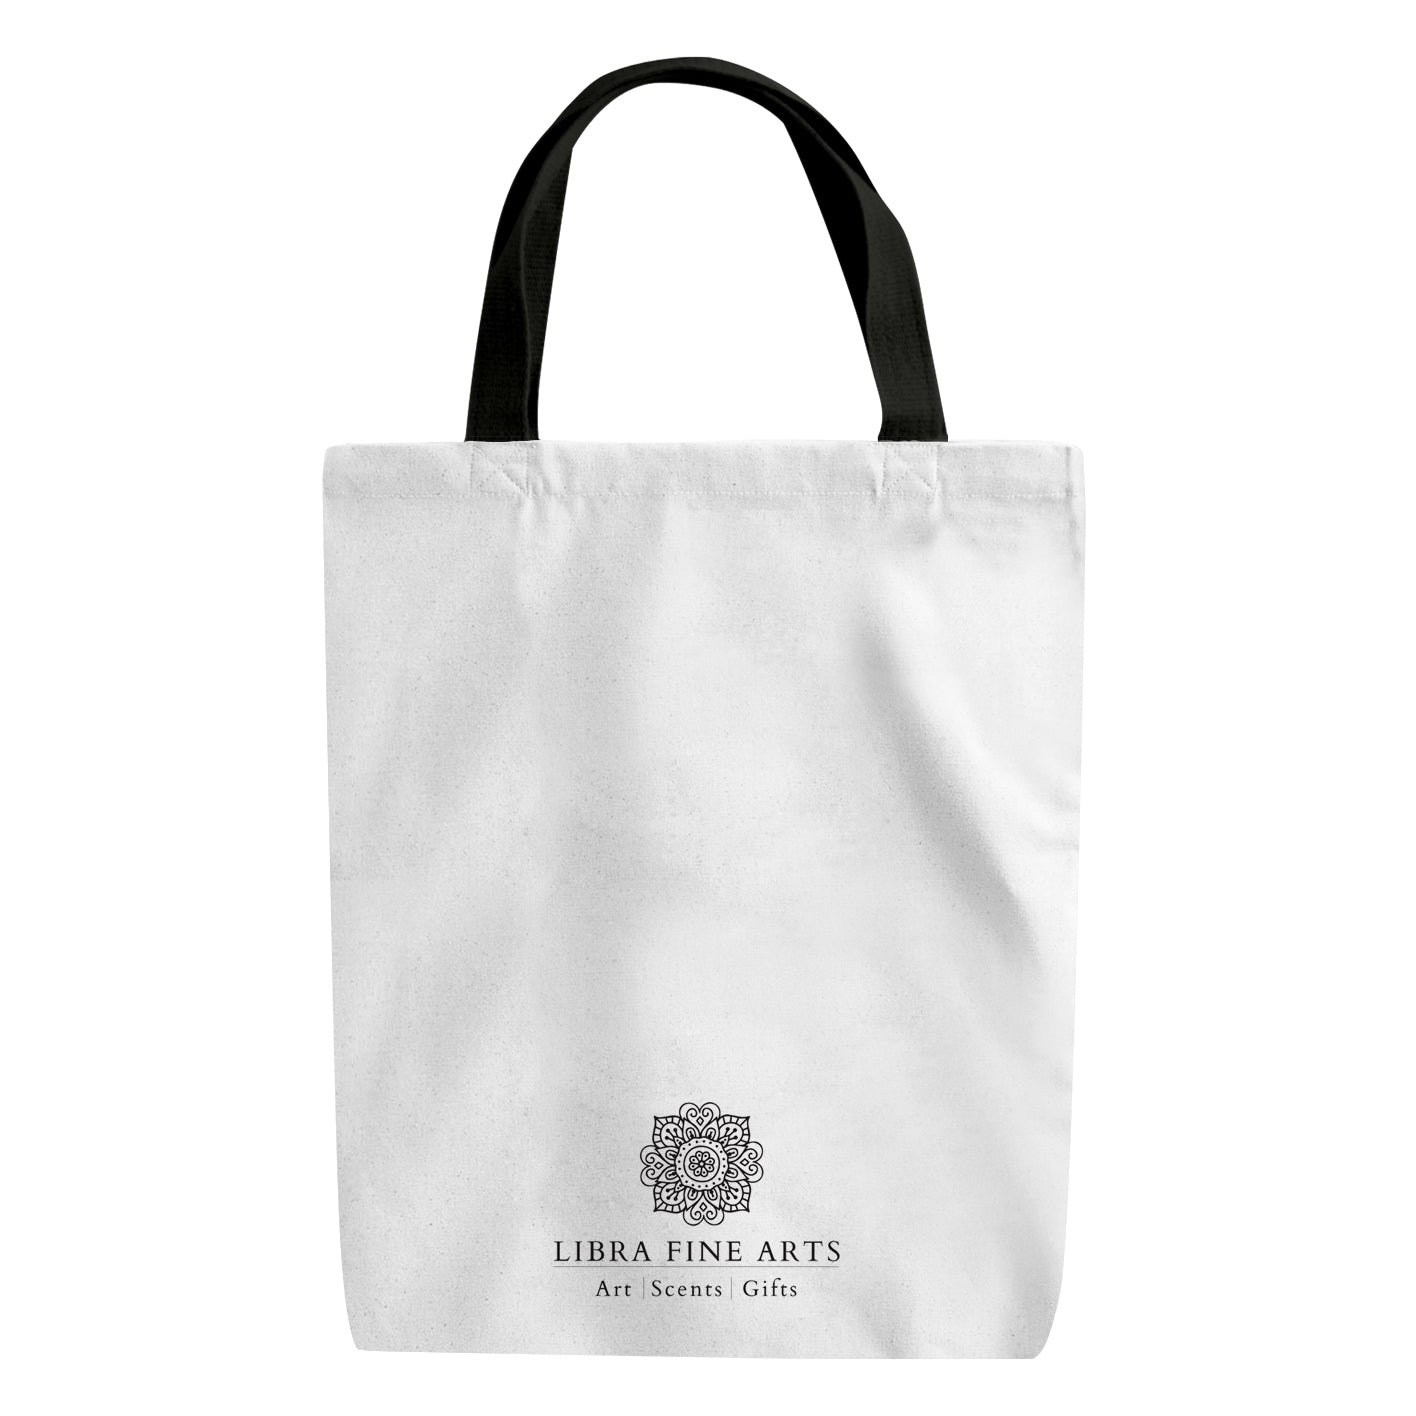 Hedgehog Shopping Bag, Cute Animal Bag, Hand Drawn Design, Gifts for Her, Hedgehog Gift, Reusable Bag